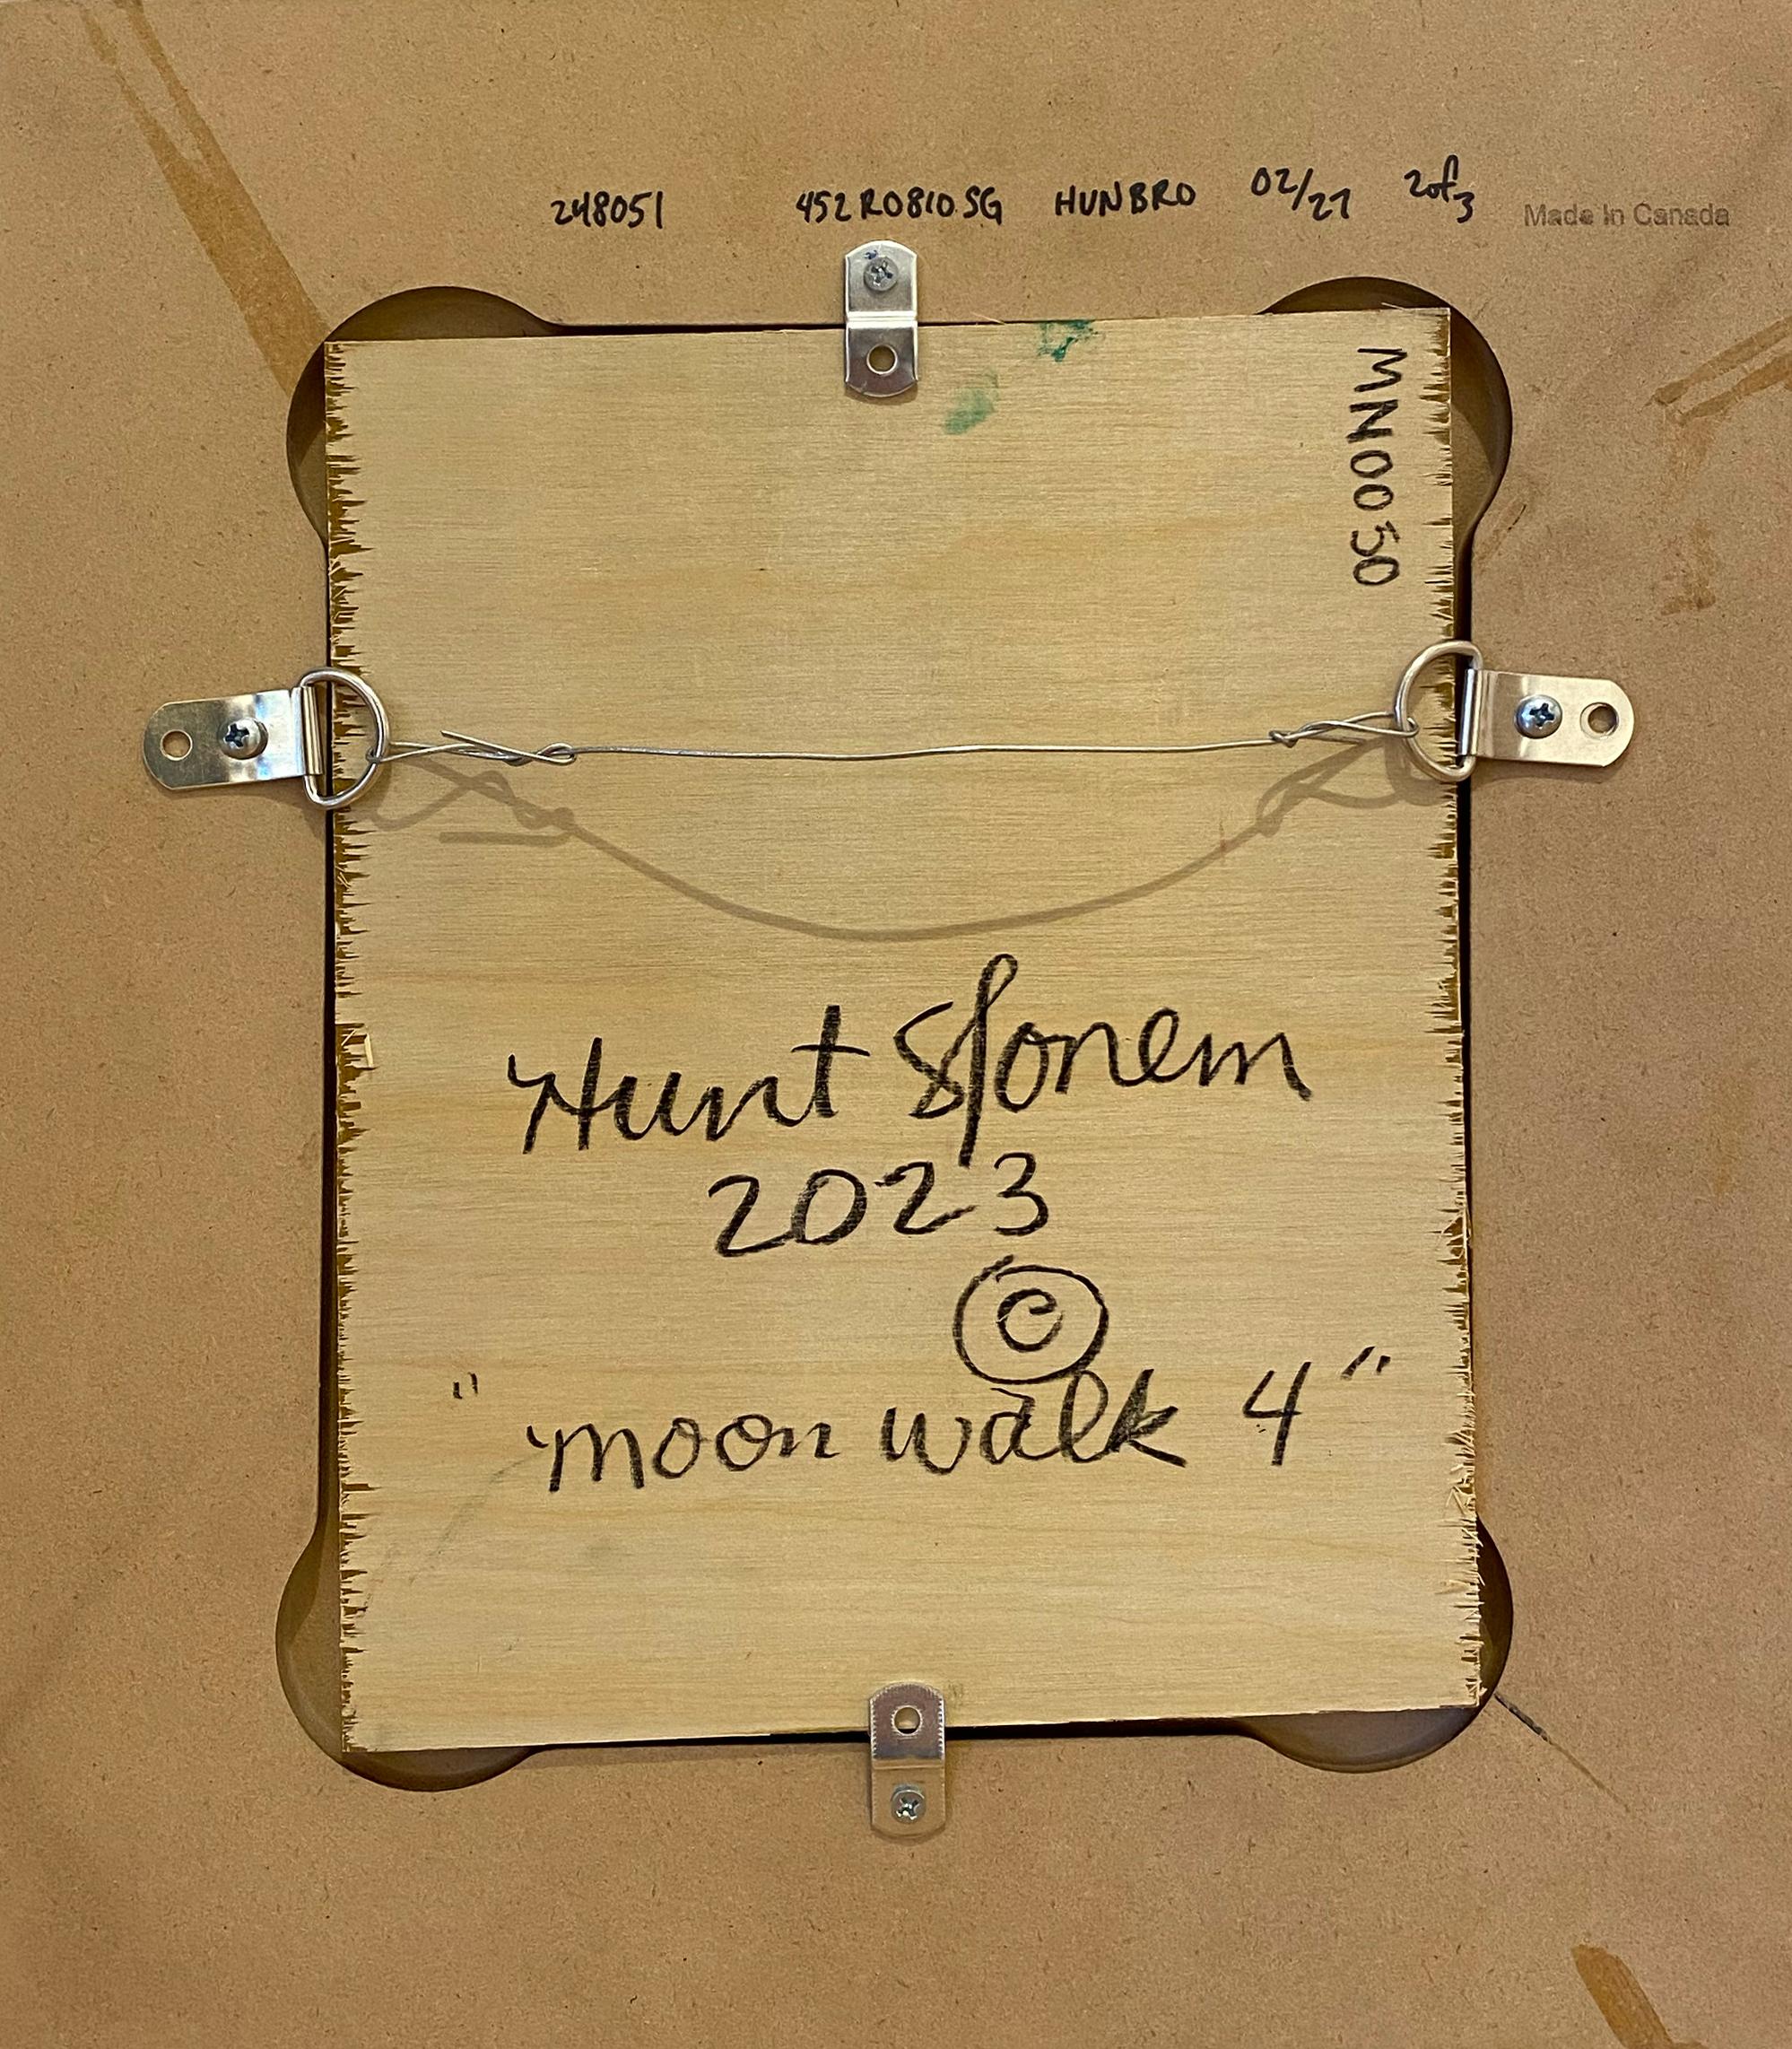 Artist:  Slonem, Hunt
Title:  Moon Walk 4
Date:  2023
Medium:  Oil, Acrylic and Diamond Dust on Wood
Unframed Dimensions:  10